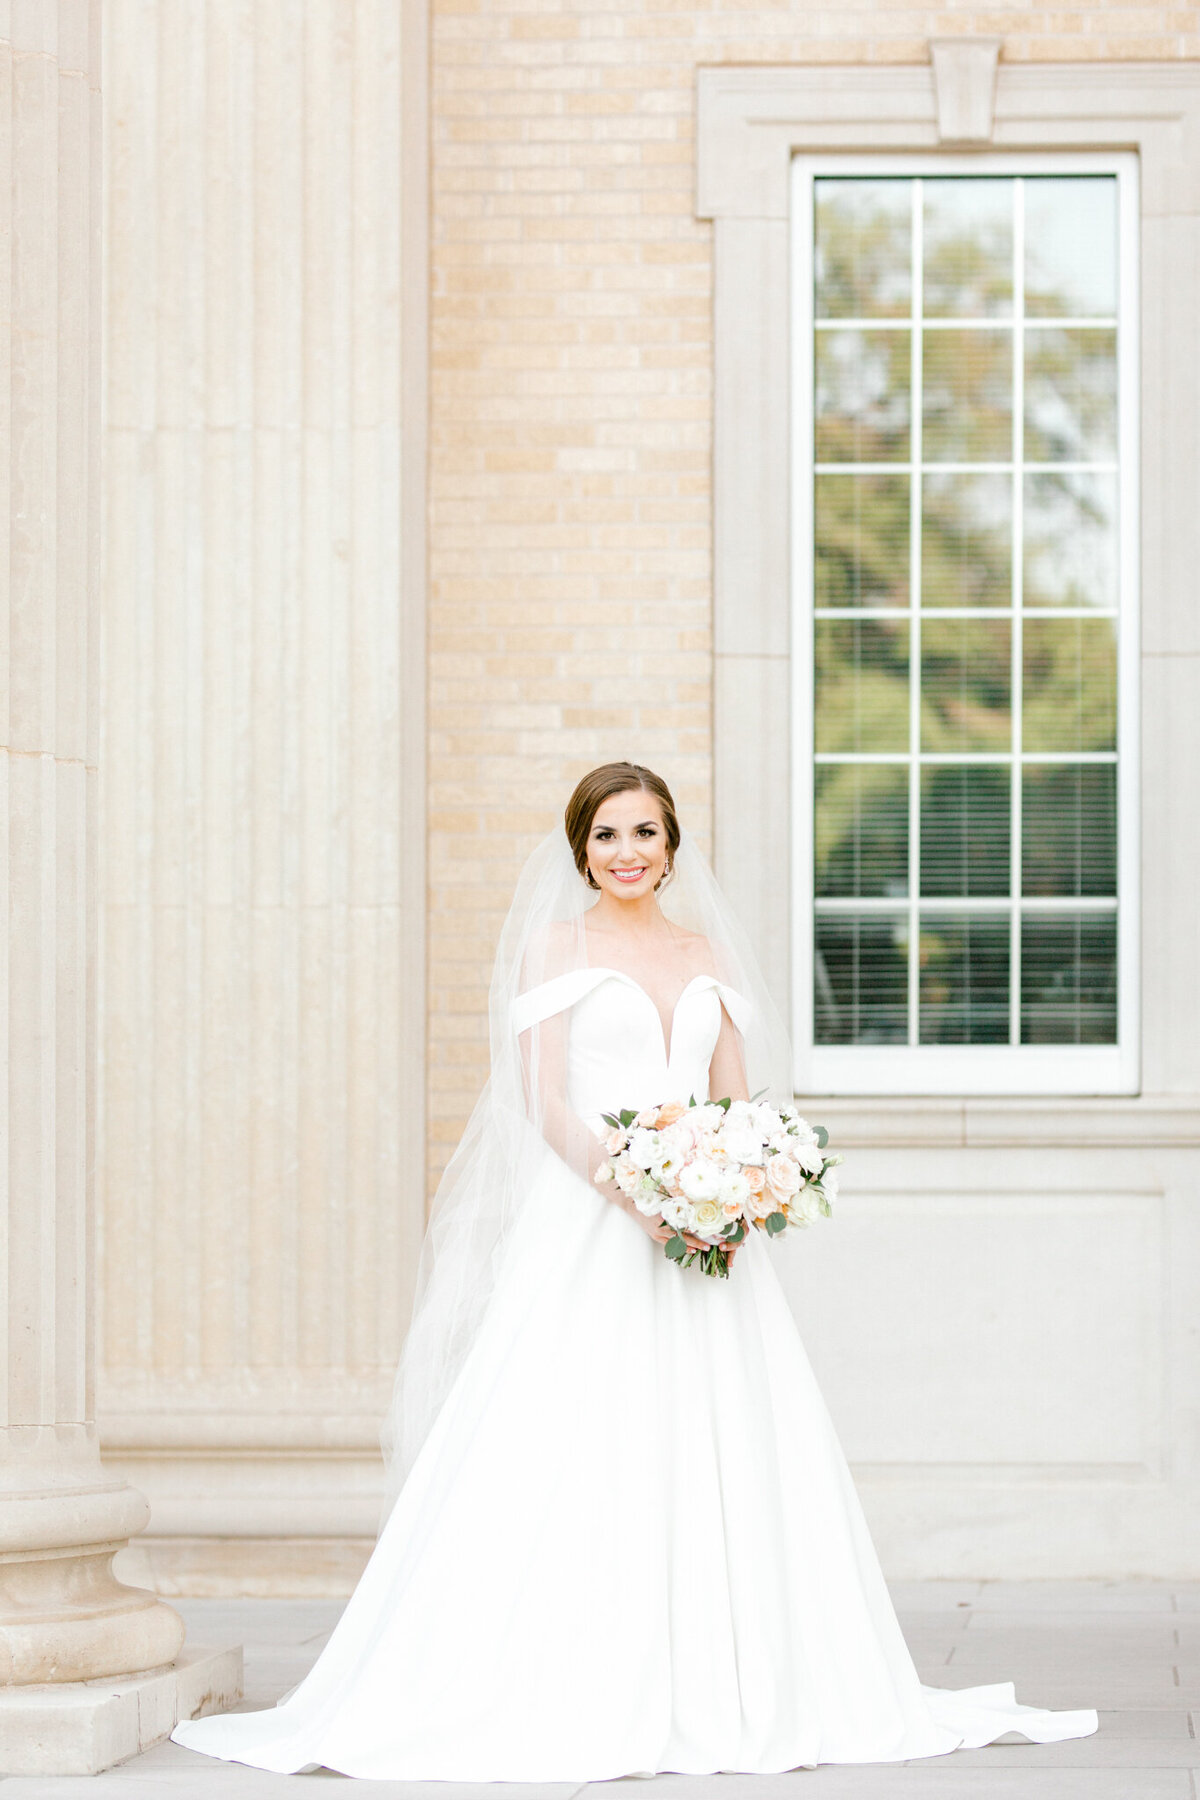 Lexi Broughton Bridal Portraits at TCU Robert Carr Chapel Fort Worth, Texas | Sami Kathryn Photography | Dallas DFW Wedding Photographer | R. Love Floral Blush and Peach Bouquet-1